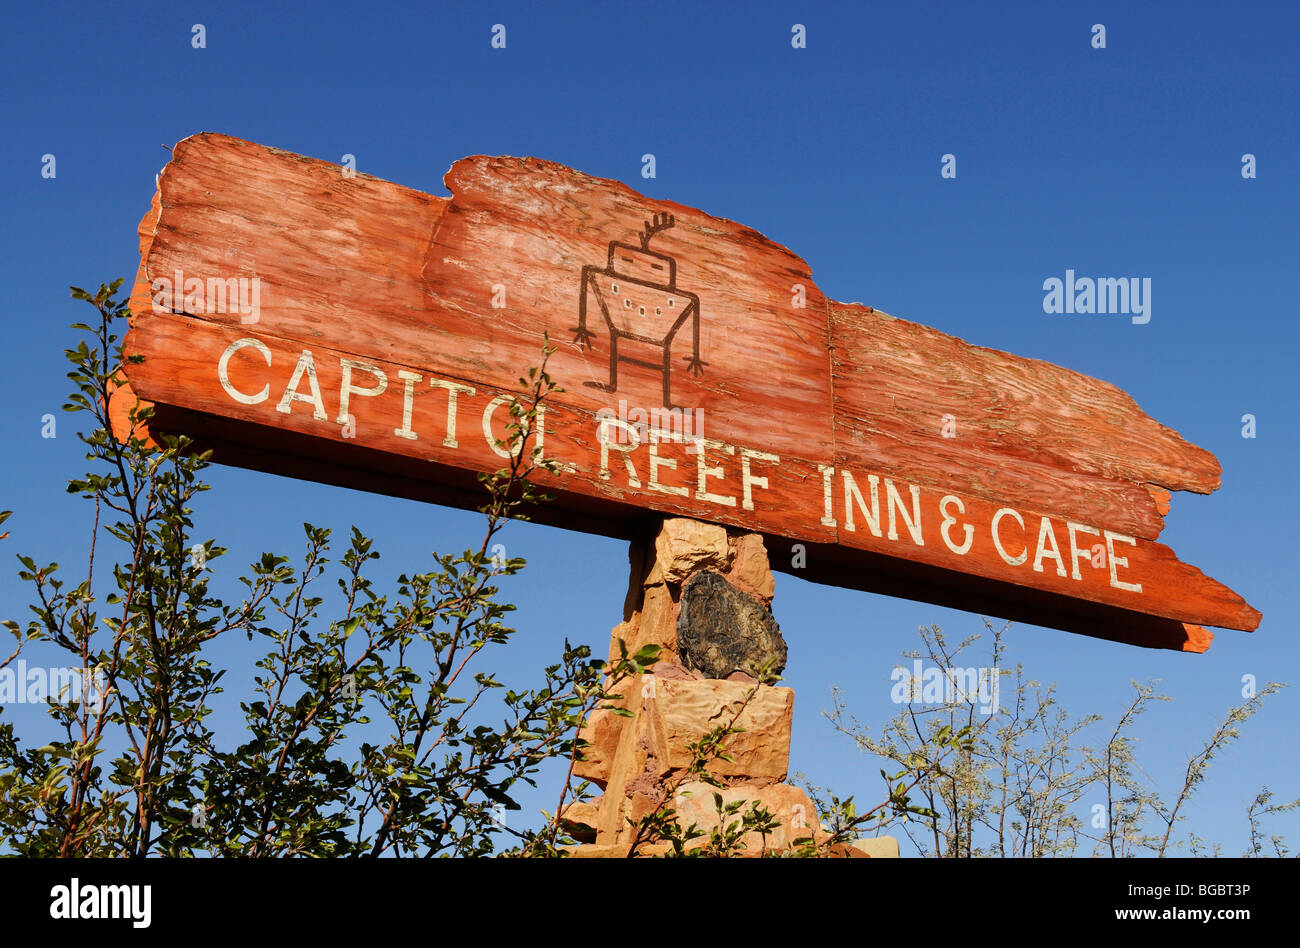 Capitol Reef Inn & Cafe, All American Man, Fremont Culture, Native American rock art, Torrey, Utah, USA Stock Photo